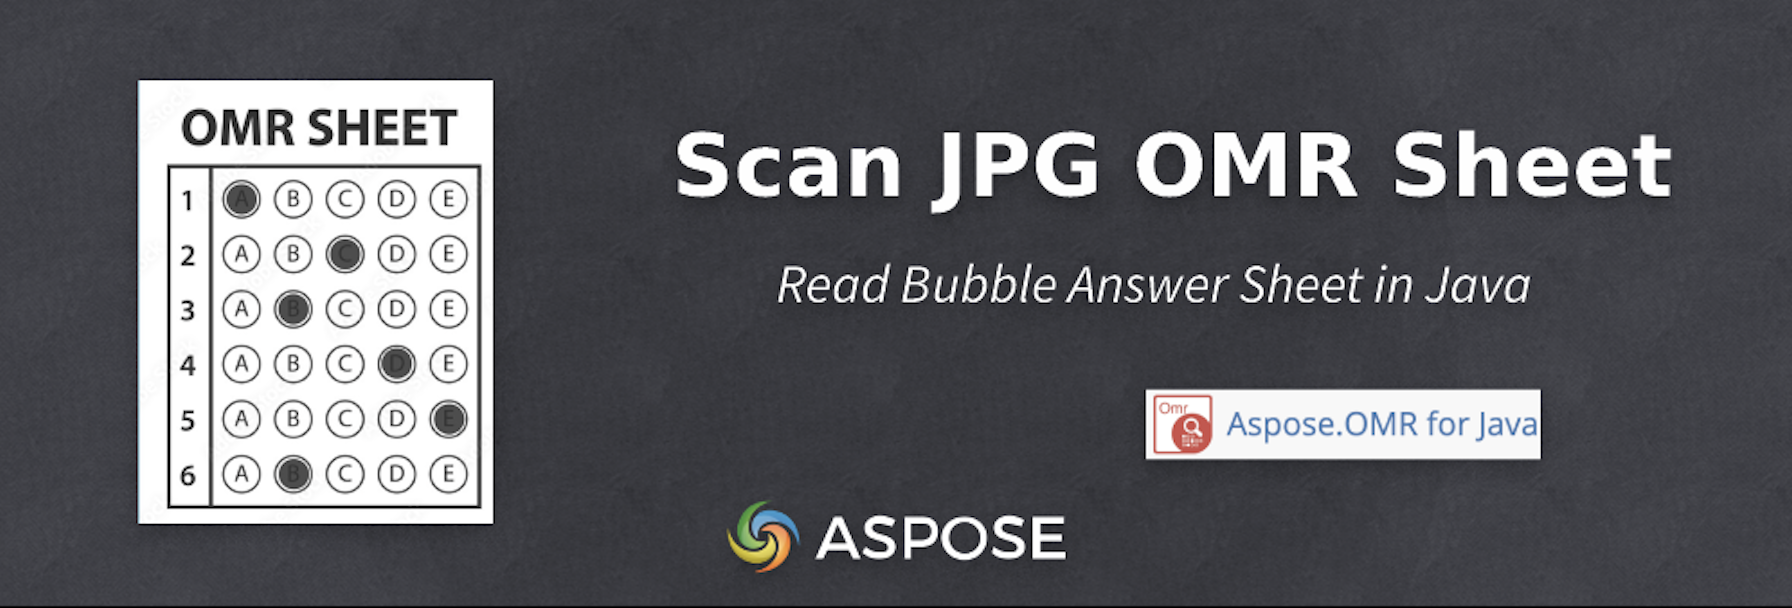 Java로 버블 답안지 스캔 - OMR 시트 JPG